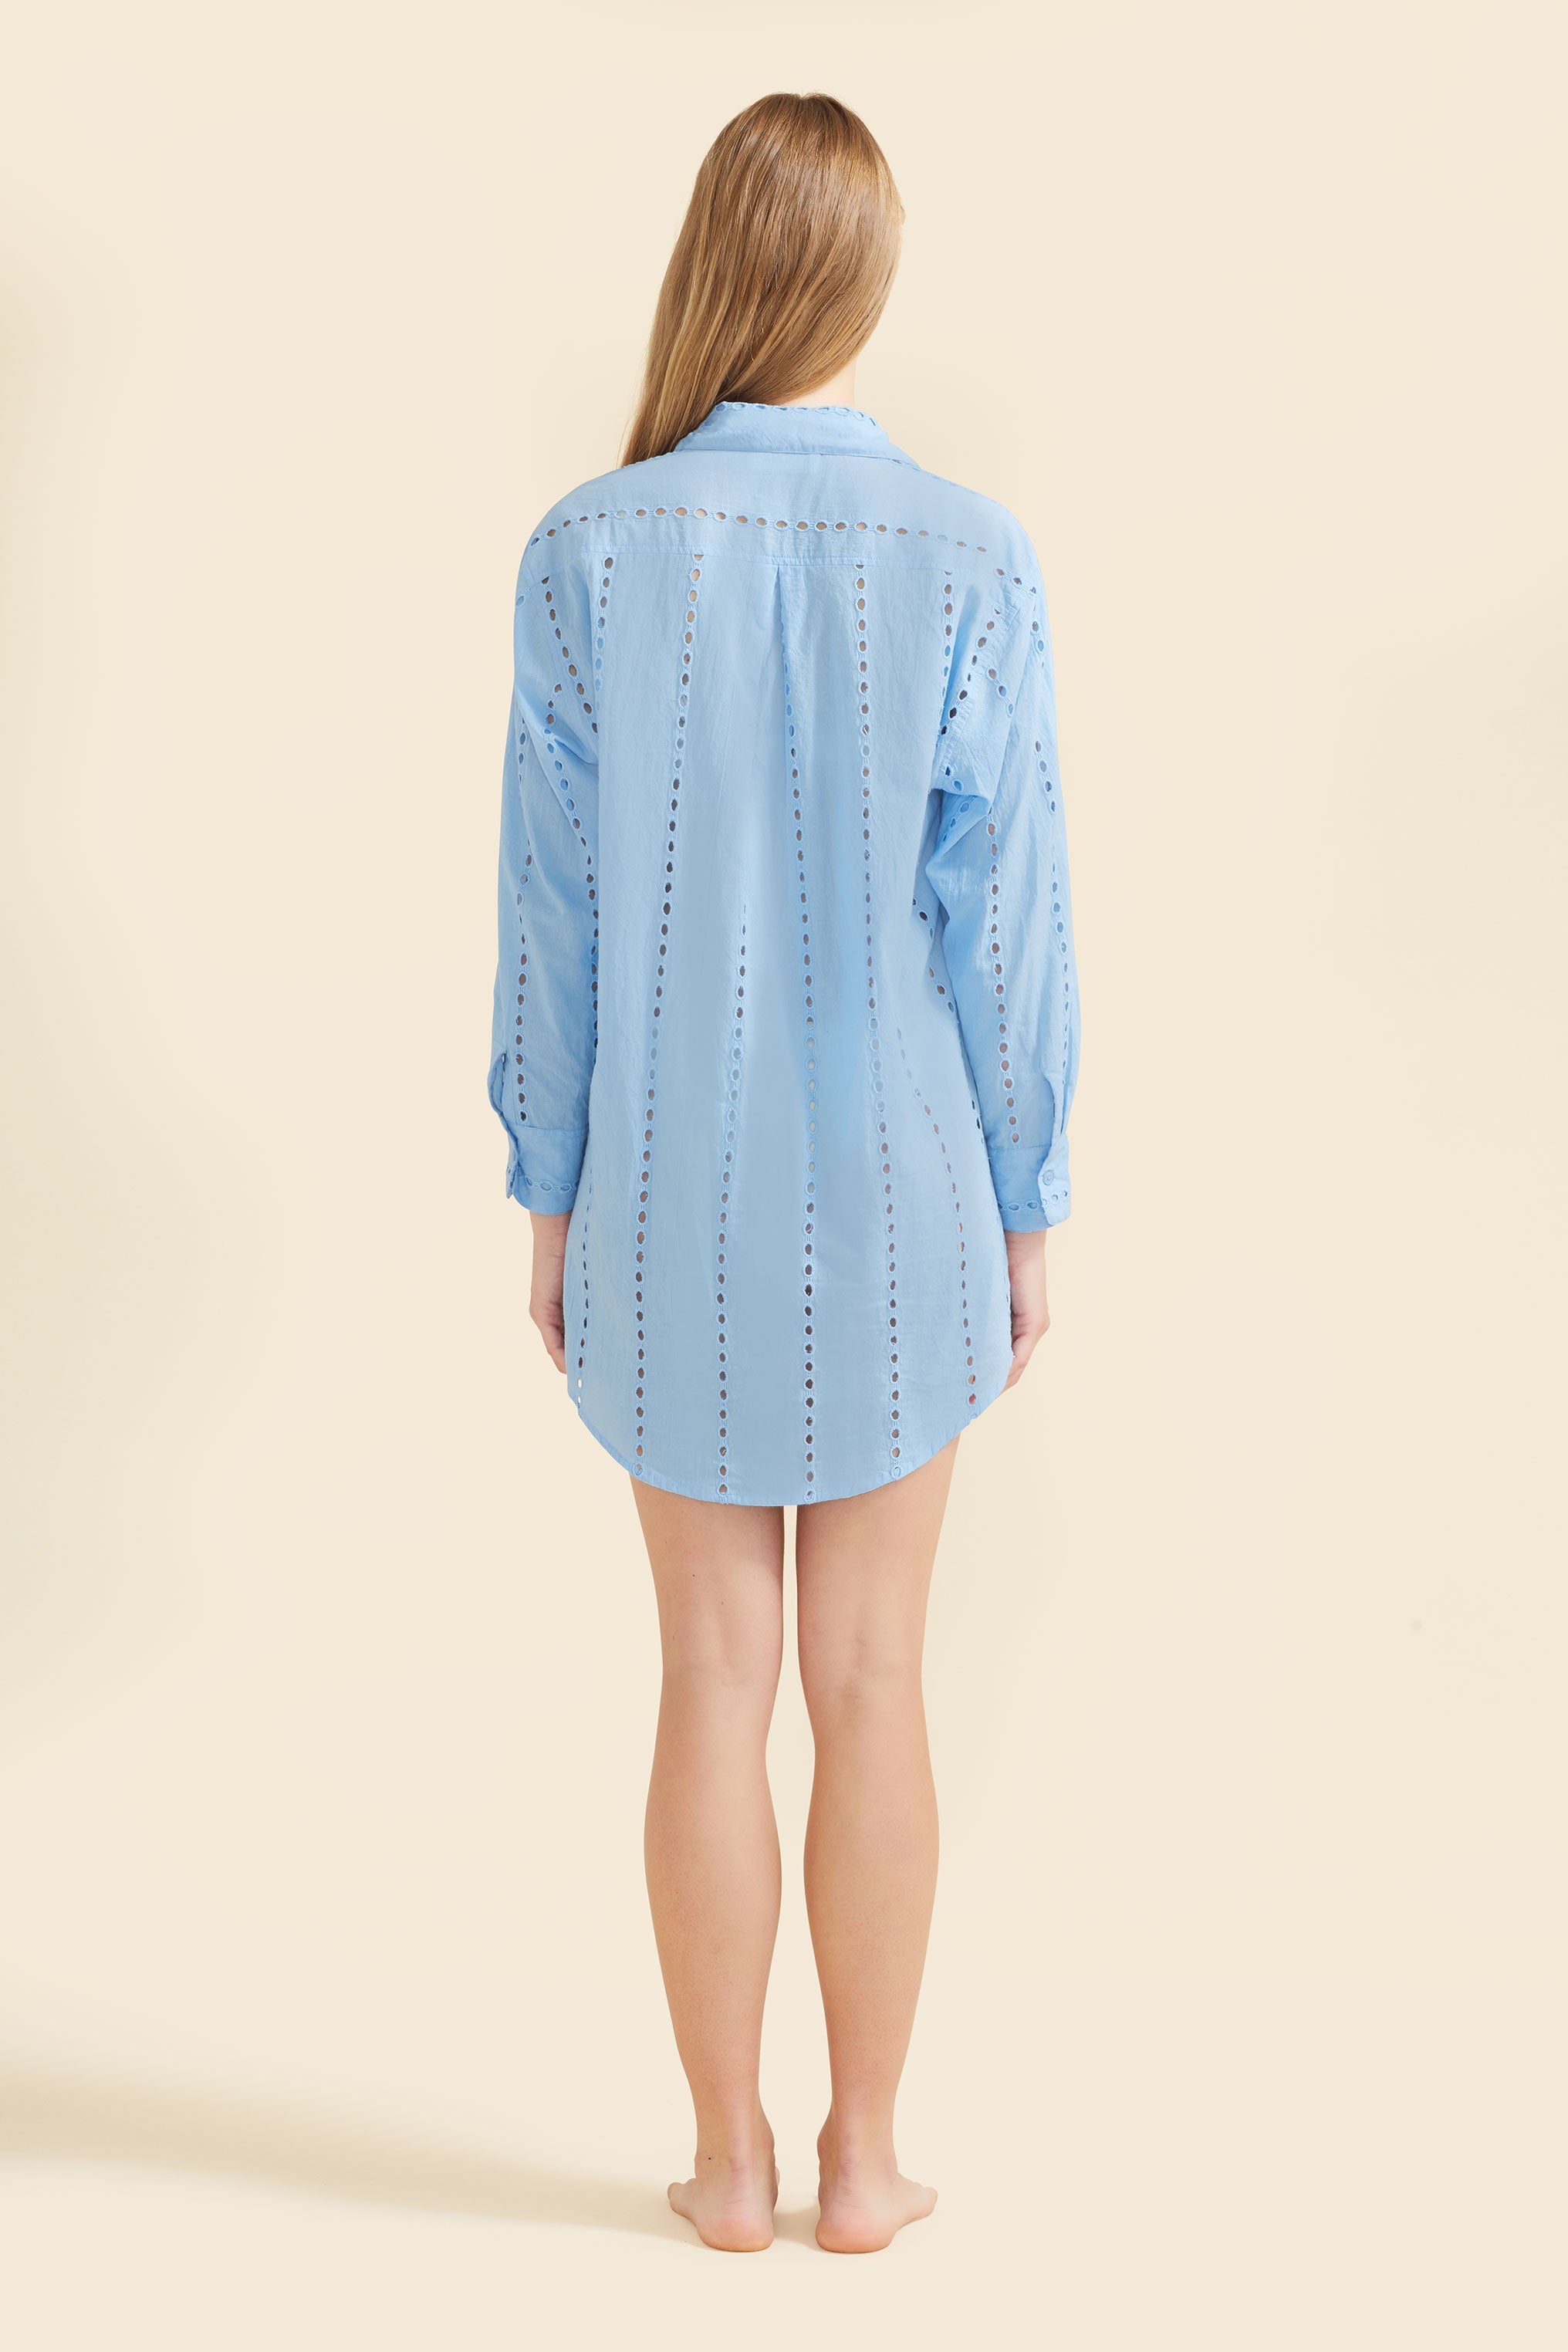 Positano Shirt Dress - Sky Blue by Sitano